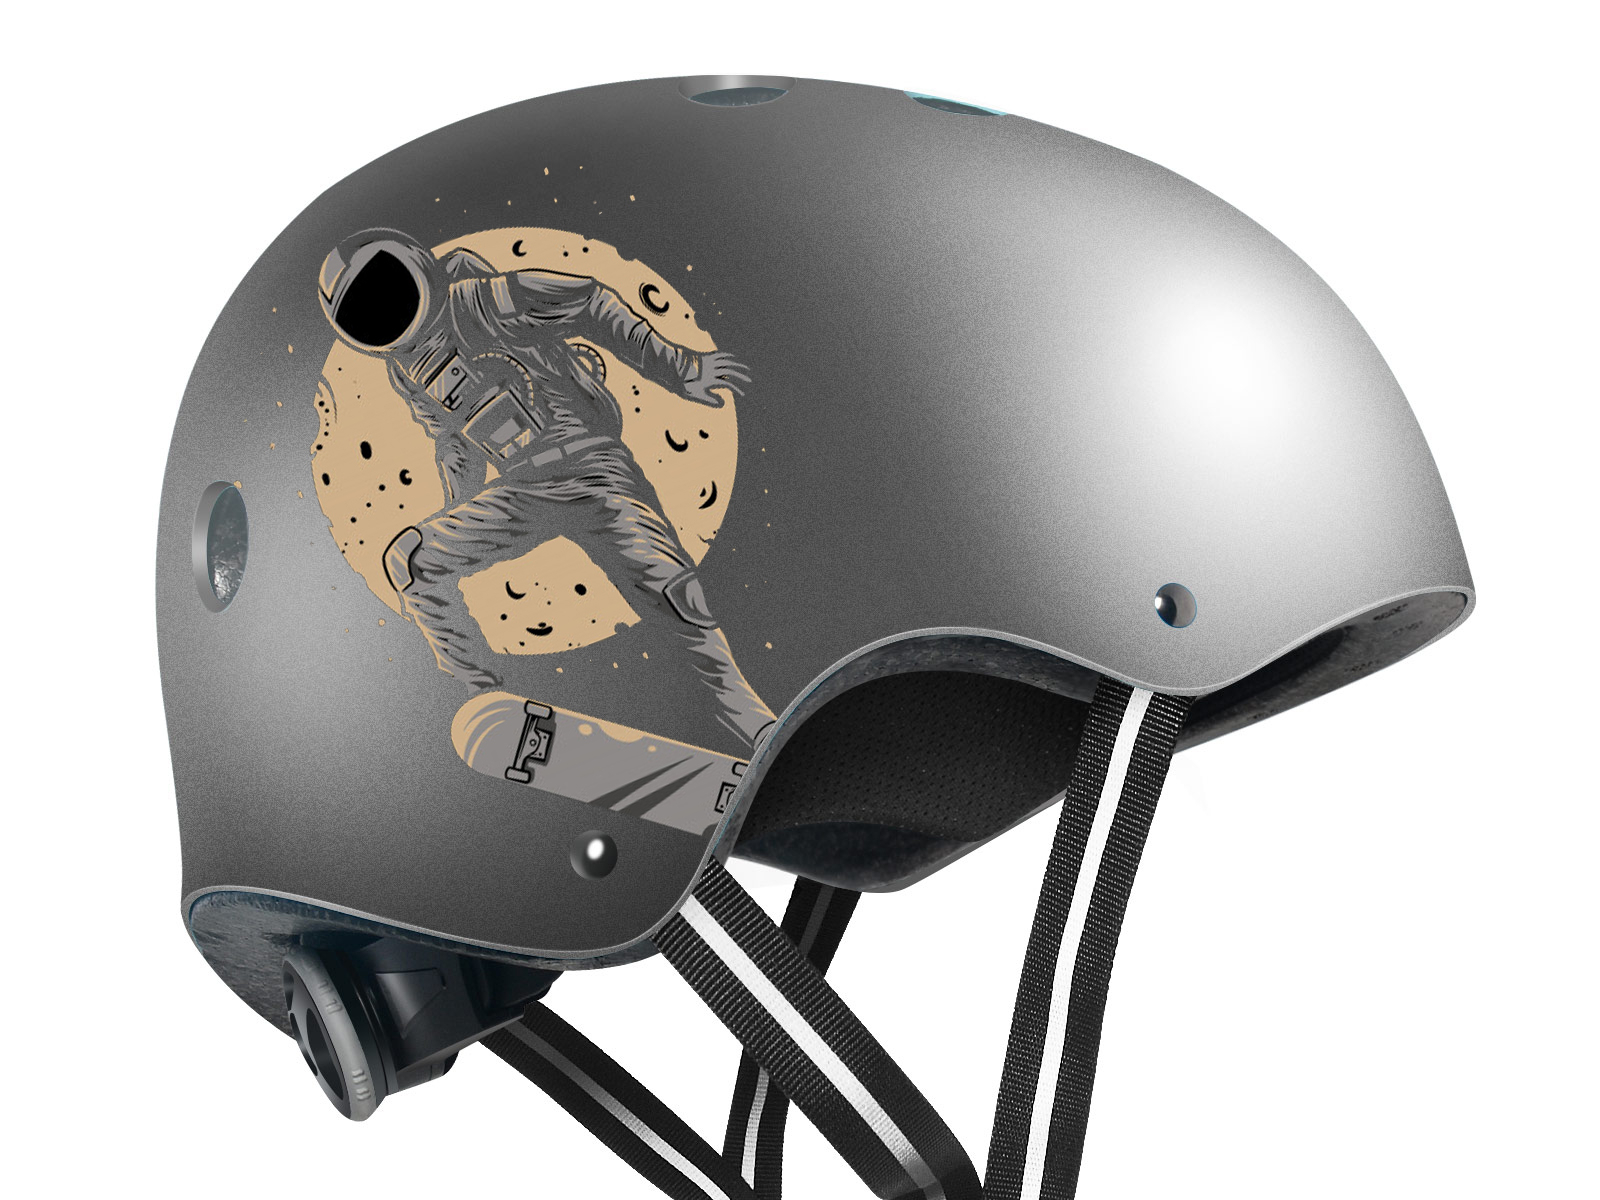 Helmet Design by Tehreem.D on Dribbble